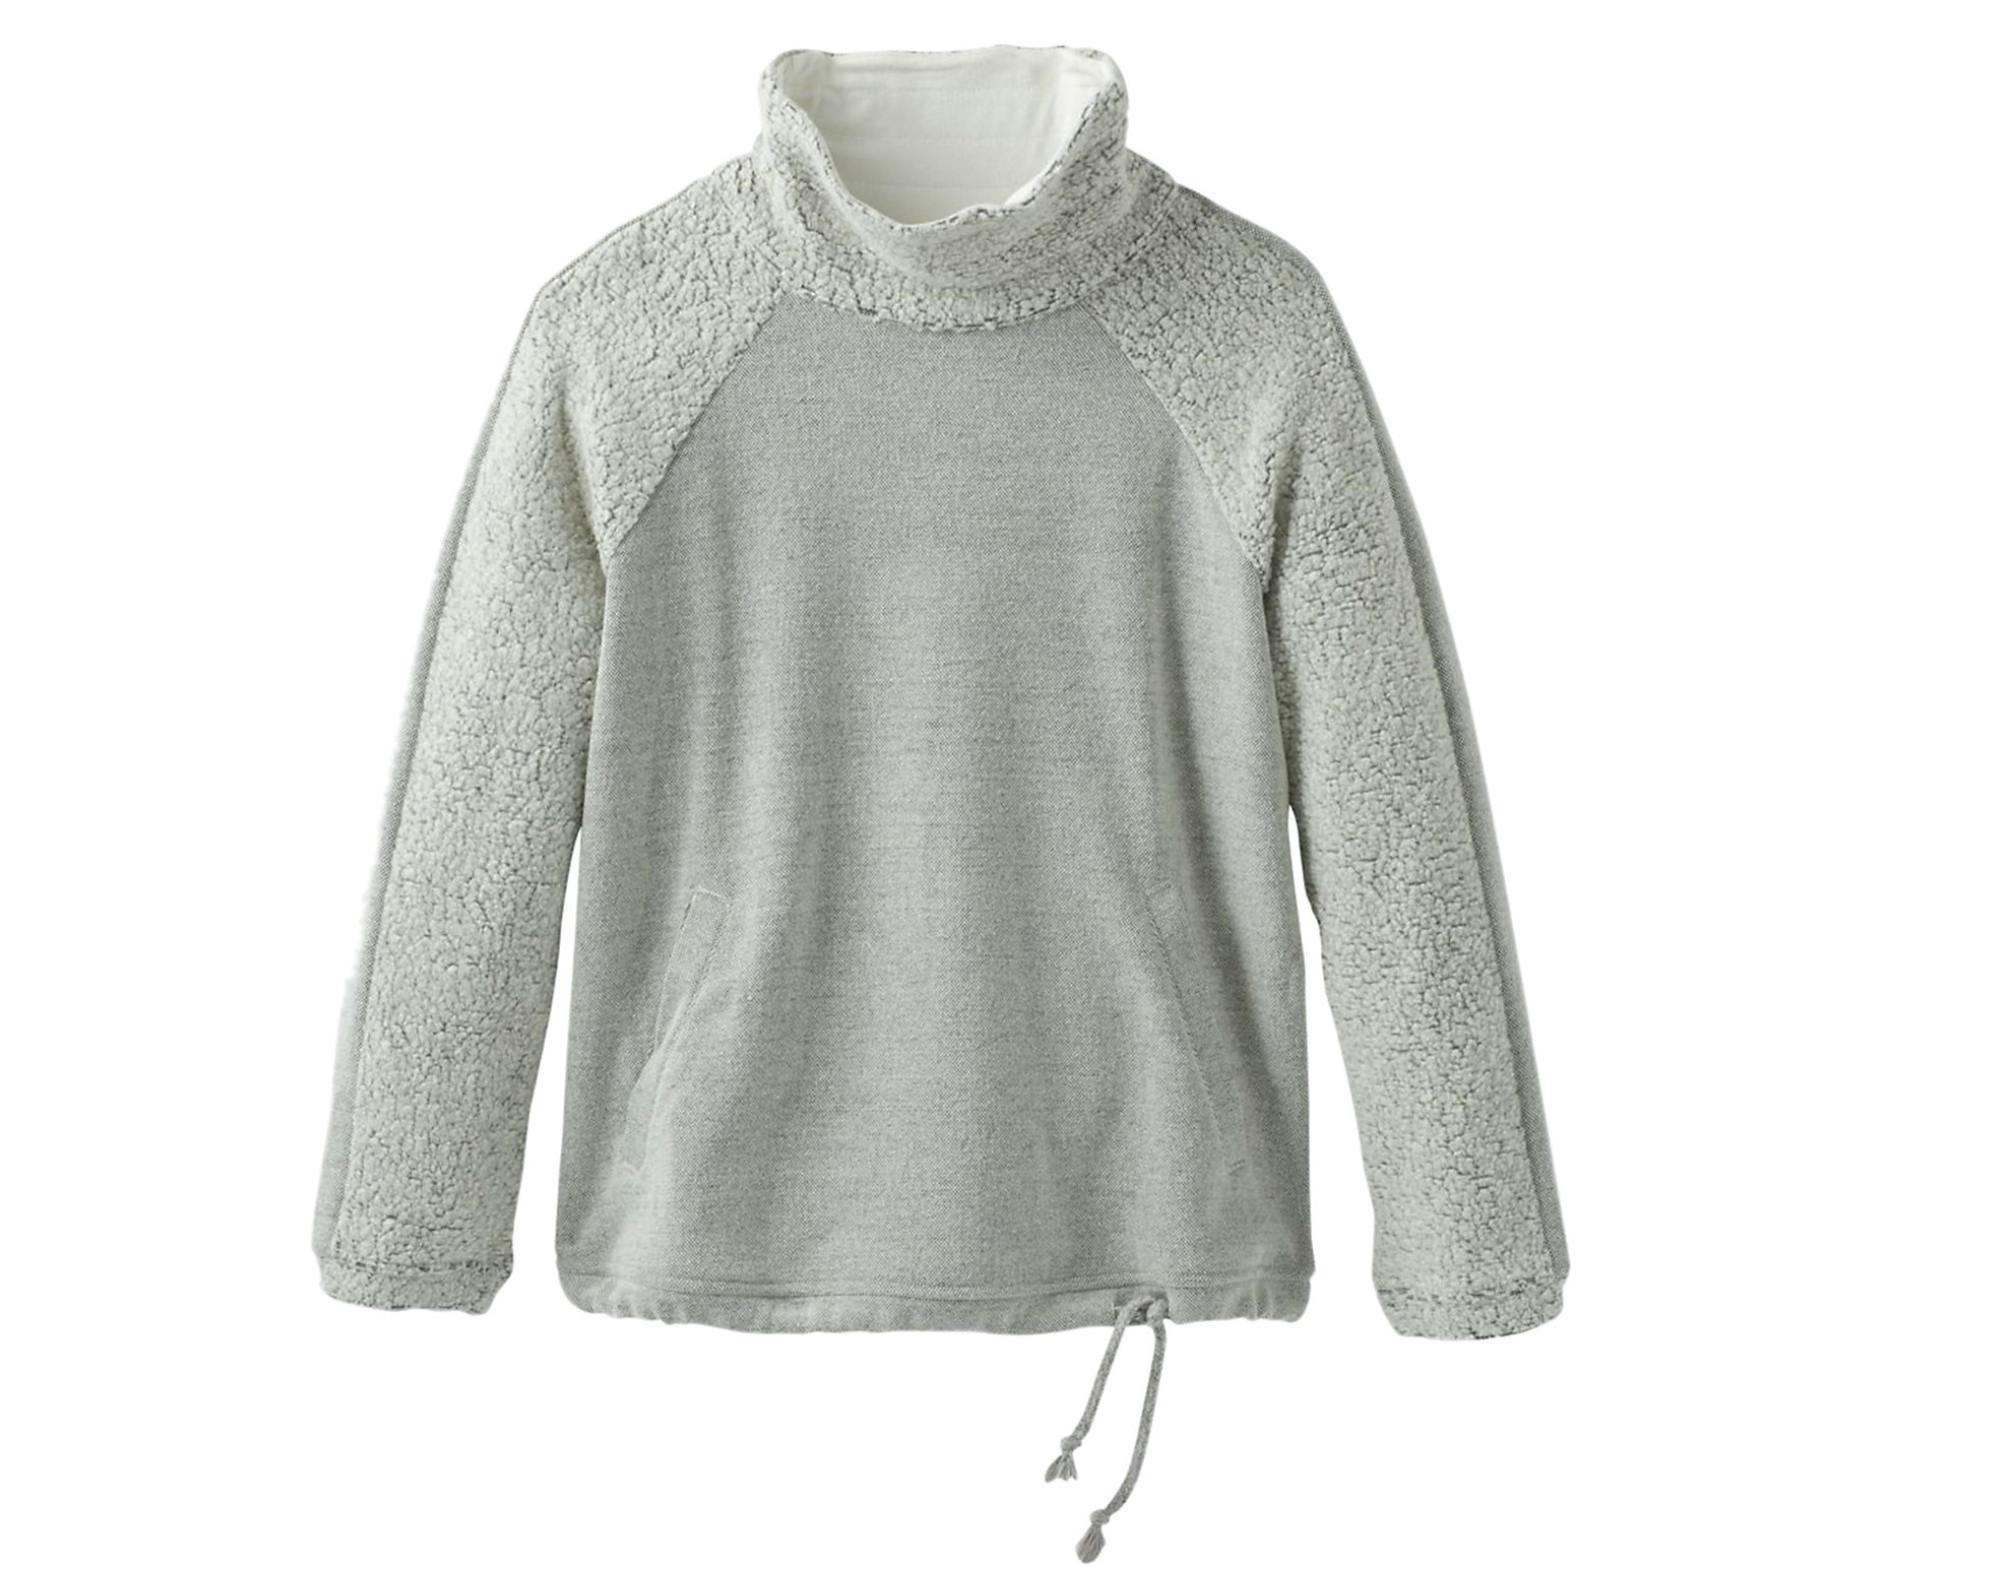 Product image of the PrAna Women's Lockwood Sweater.